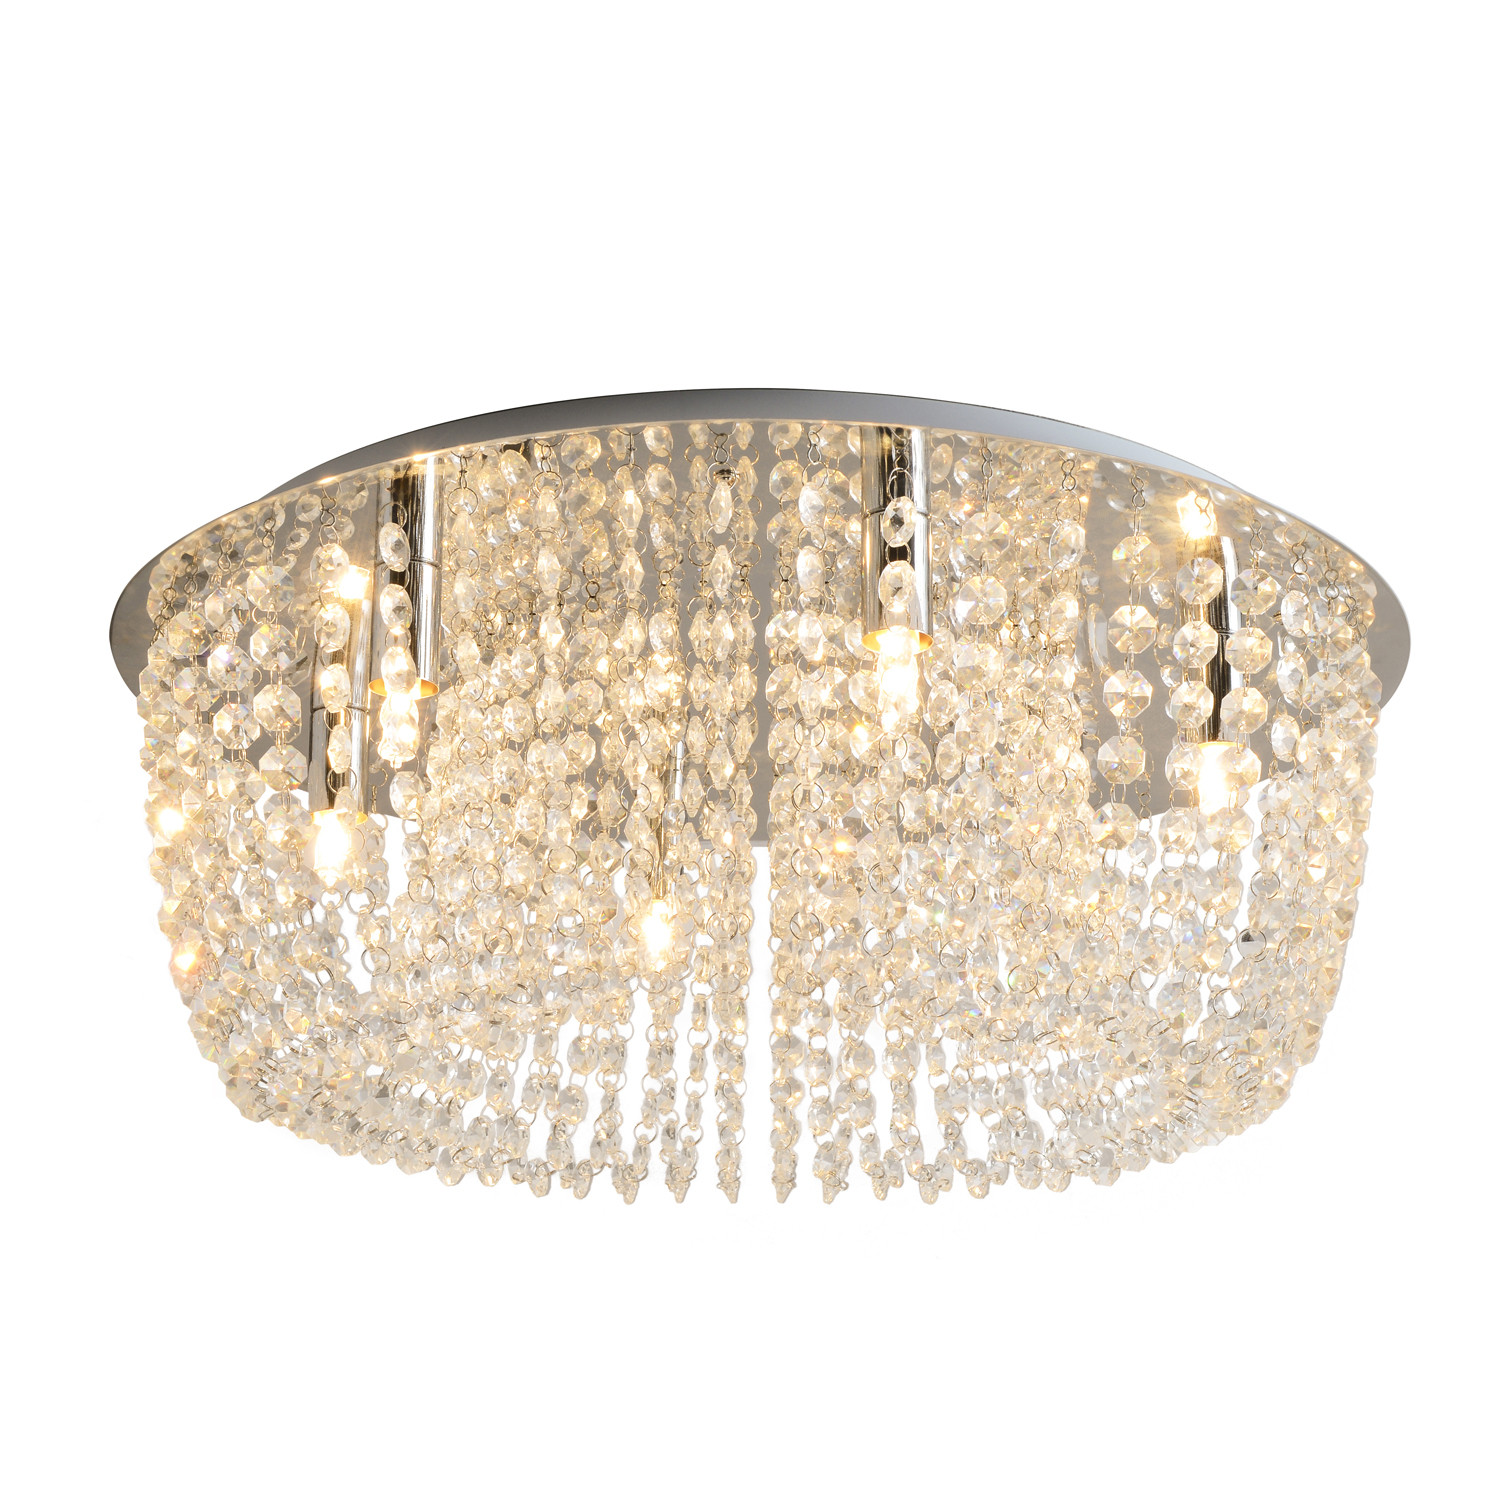 Elegance Crystal Jewelled 6 Light Ceiling Fitting Image 9